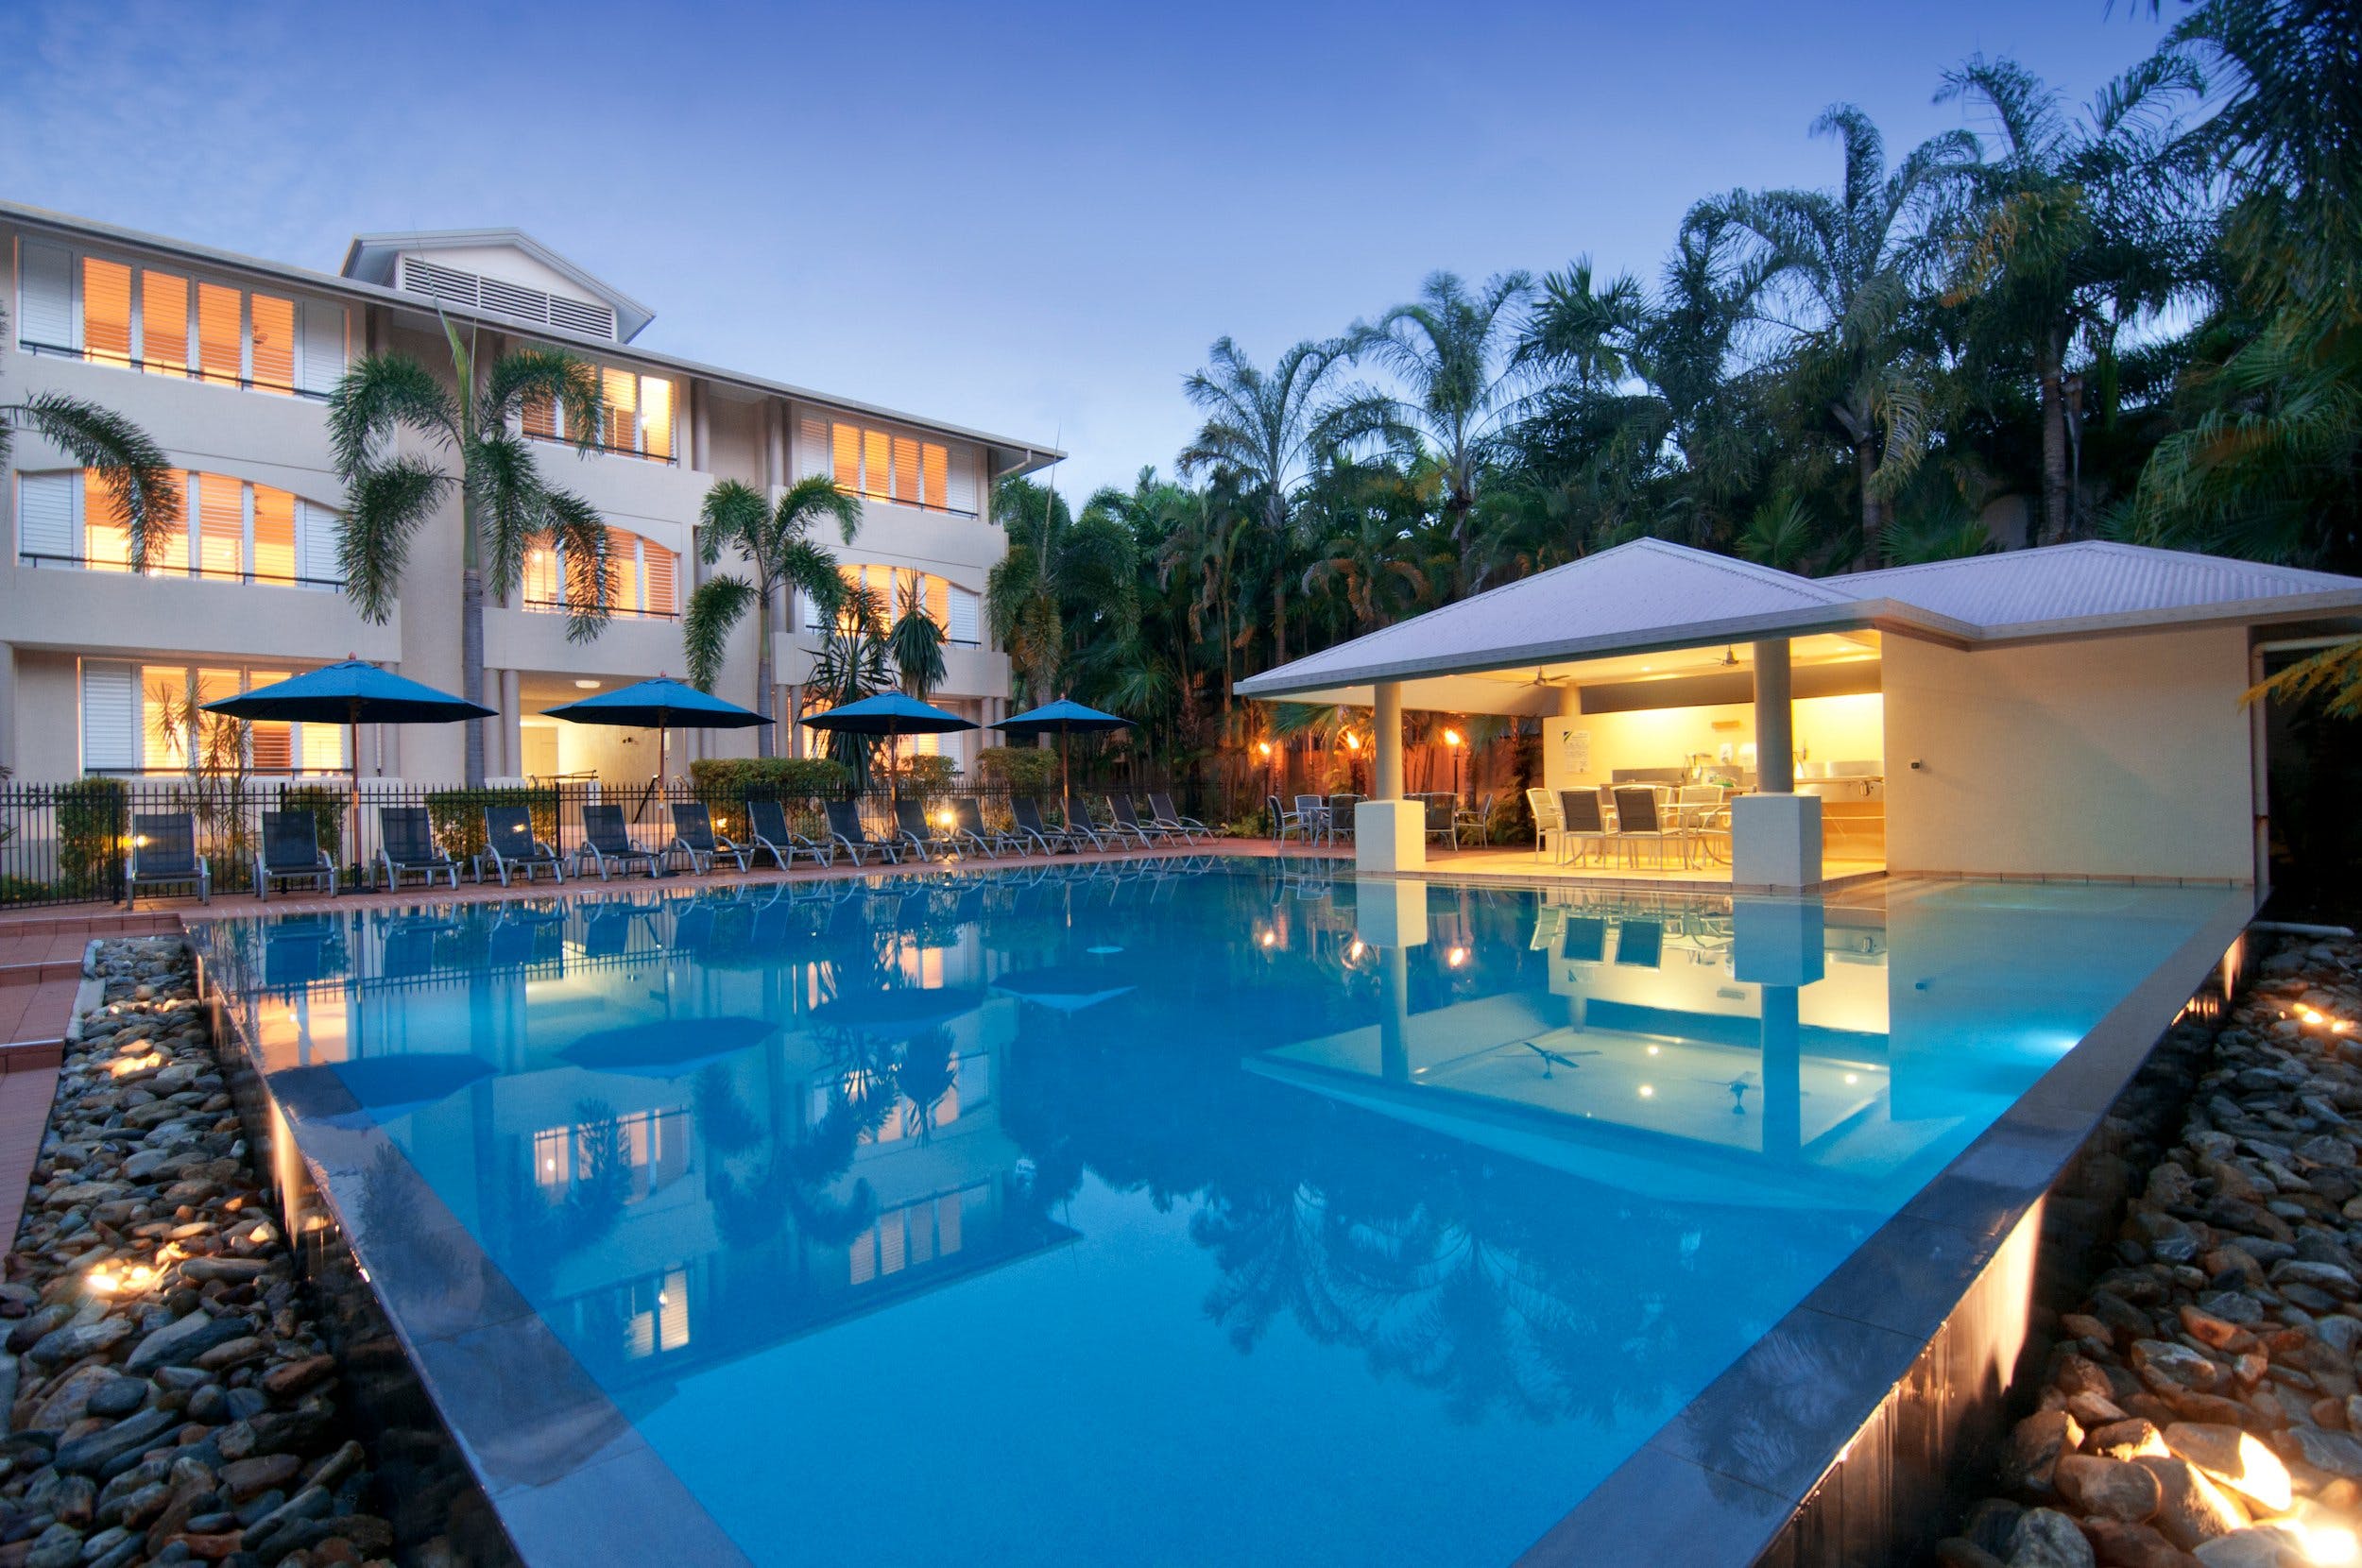 Cayman Villas Port Douglas - Accommodation Bookings 1